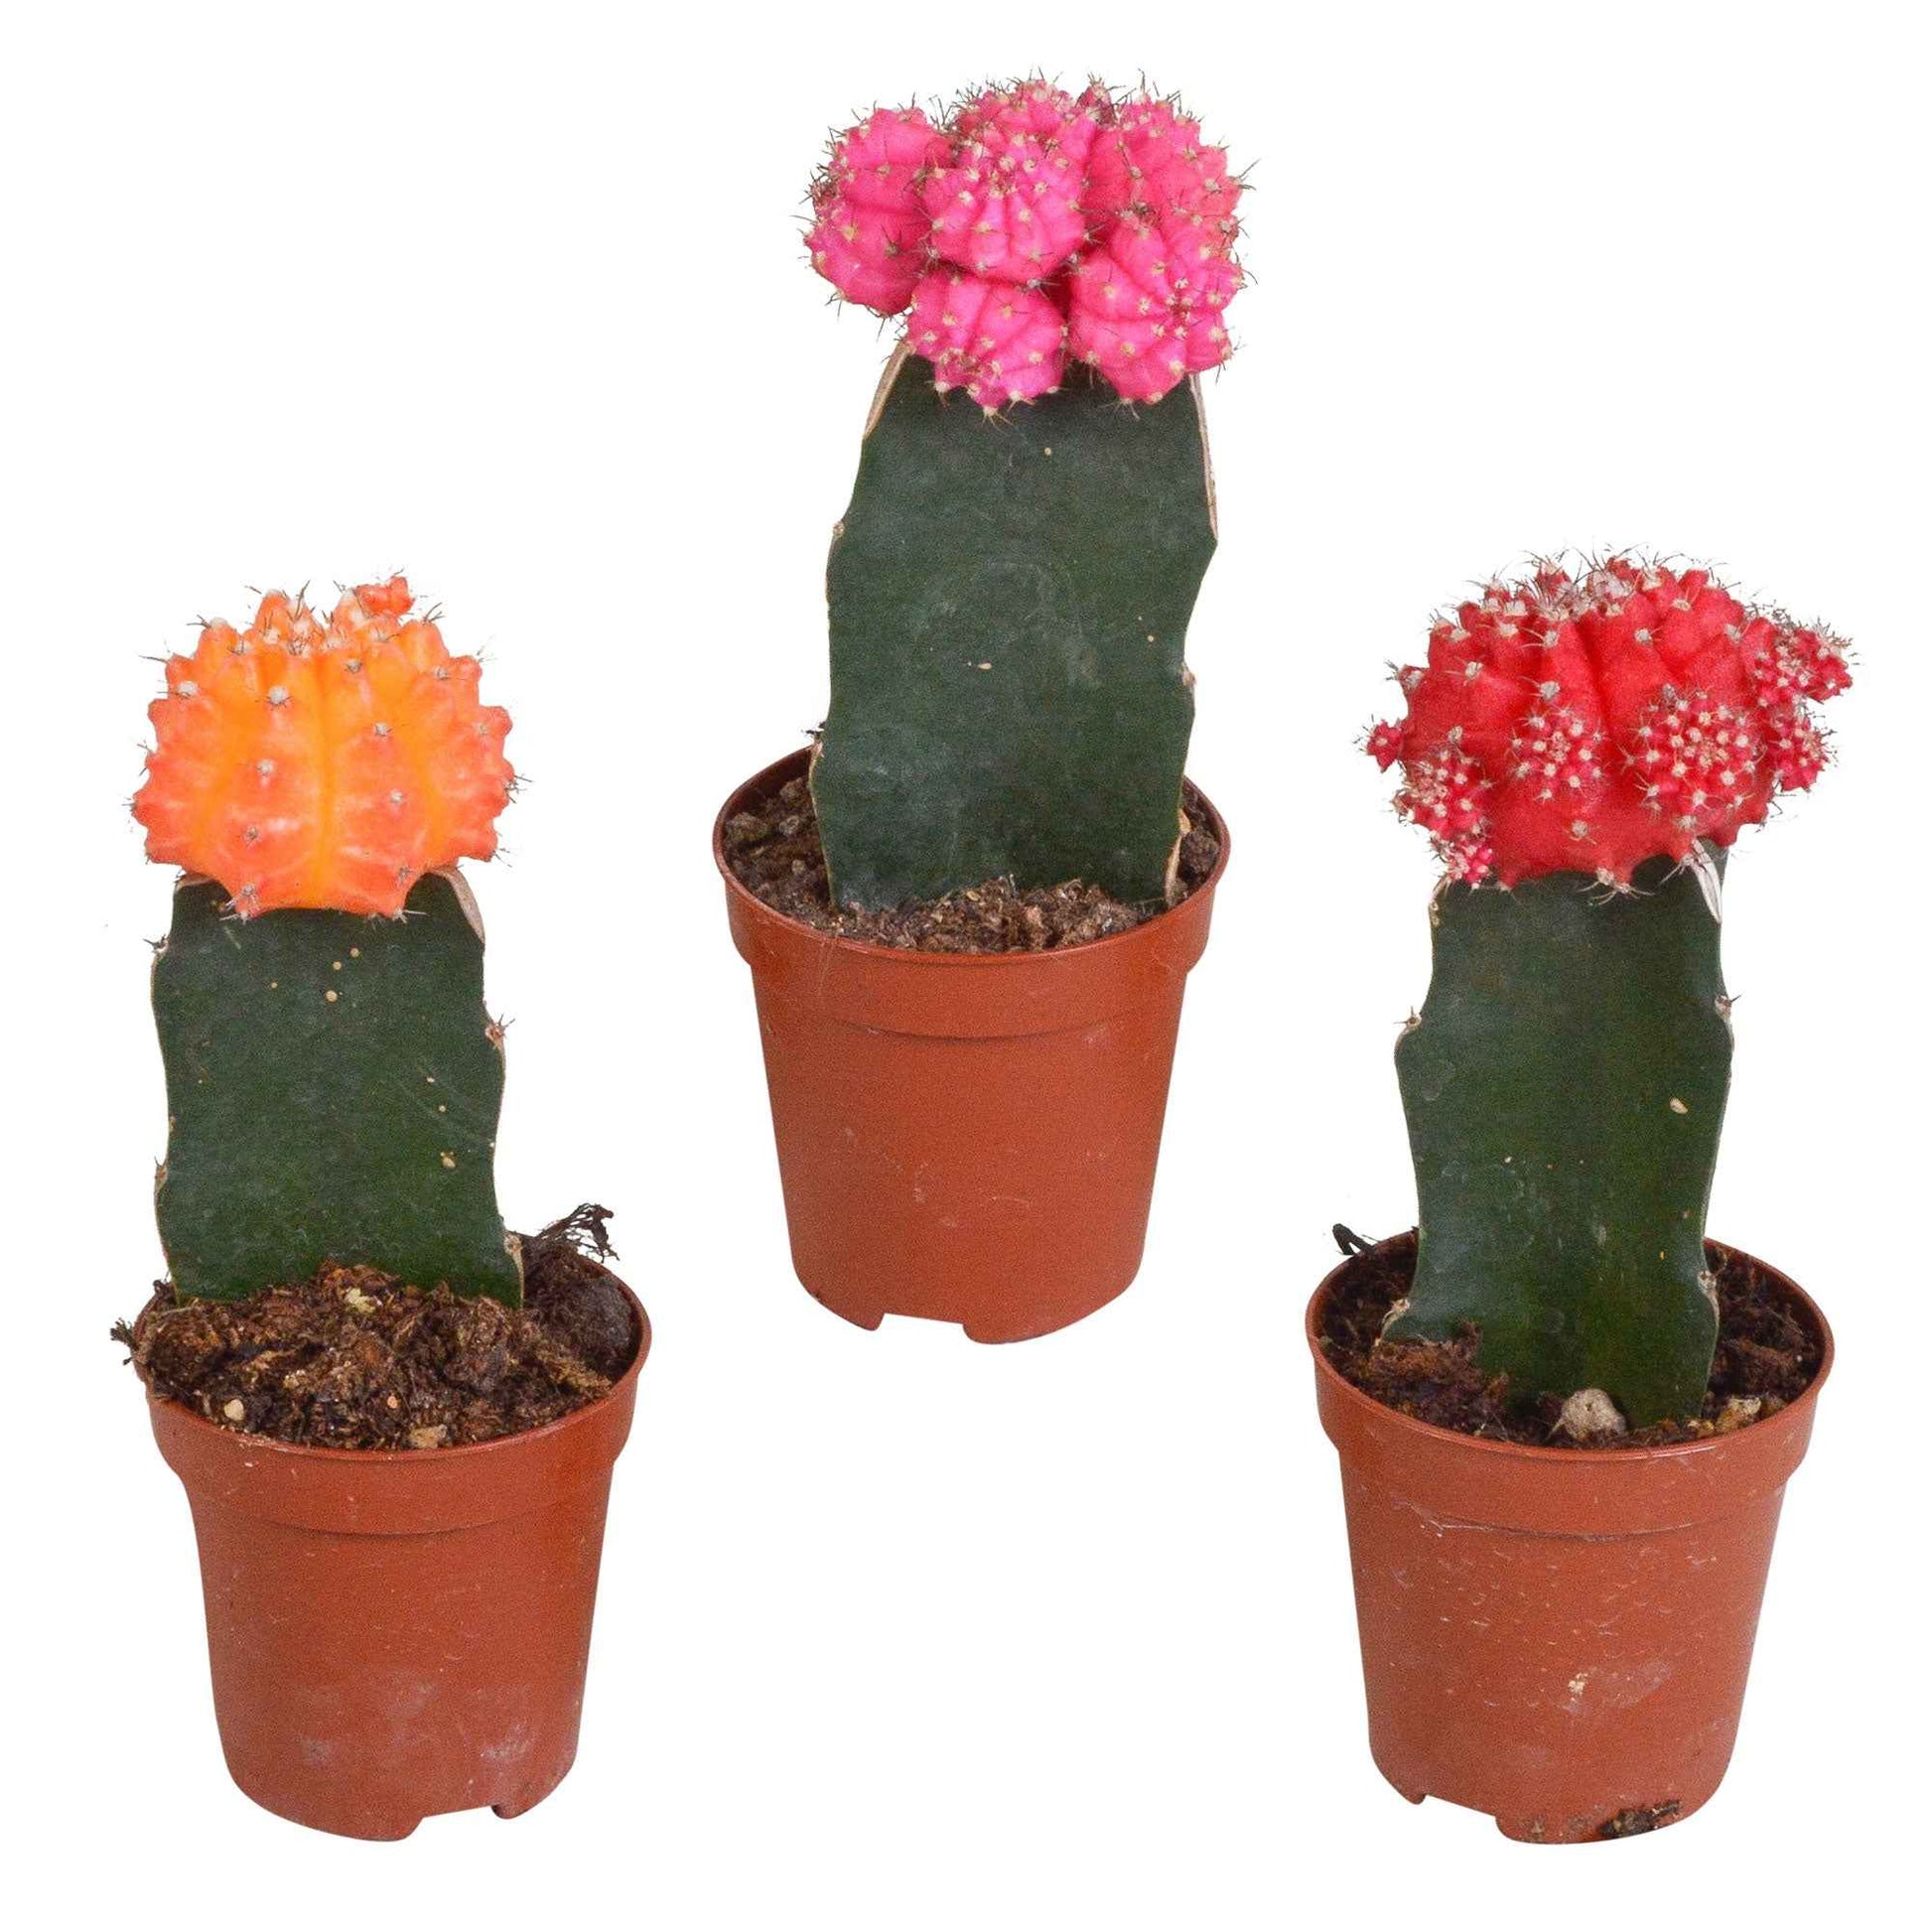 donor Bang om te sterven harpoen Koop nu kamerplant 3 Cactus Gymnocalycium mihanovichii Rood-Oranje-Roze |  Bakker.com